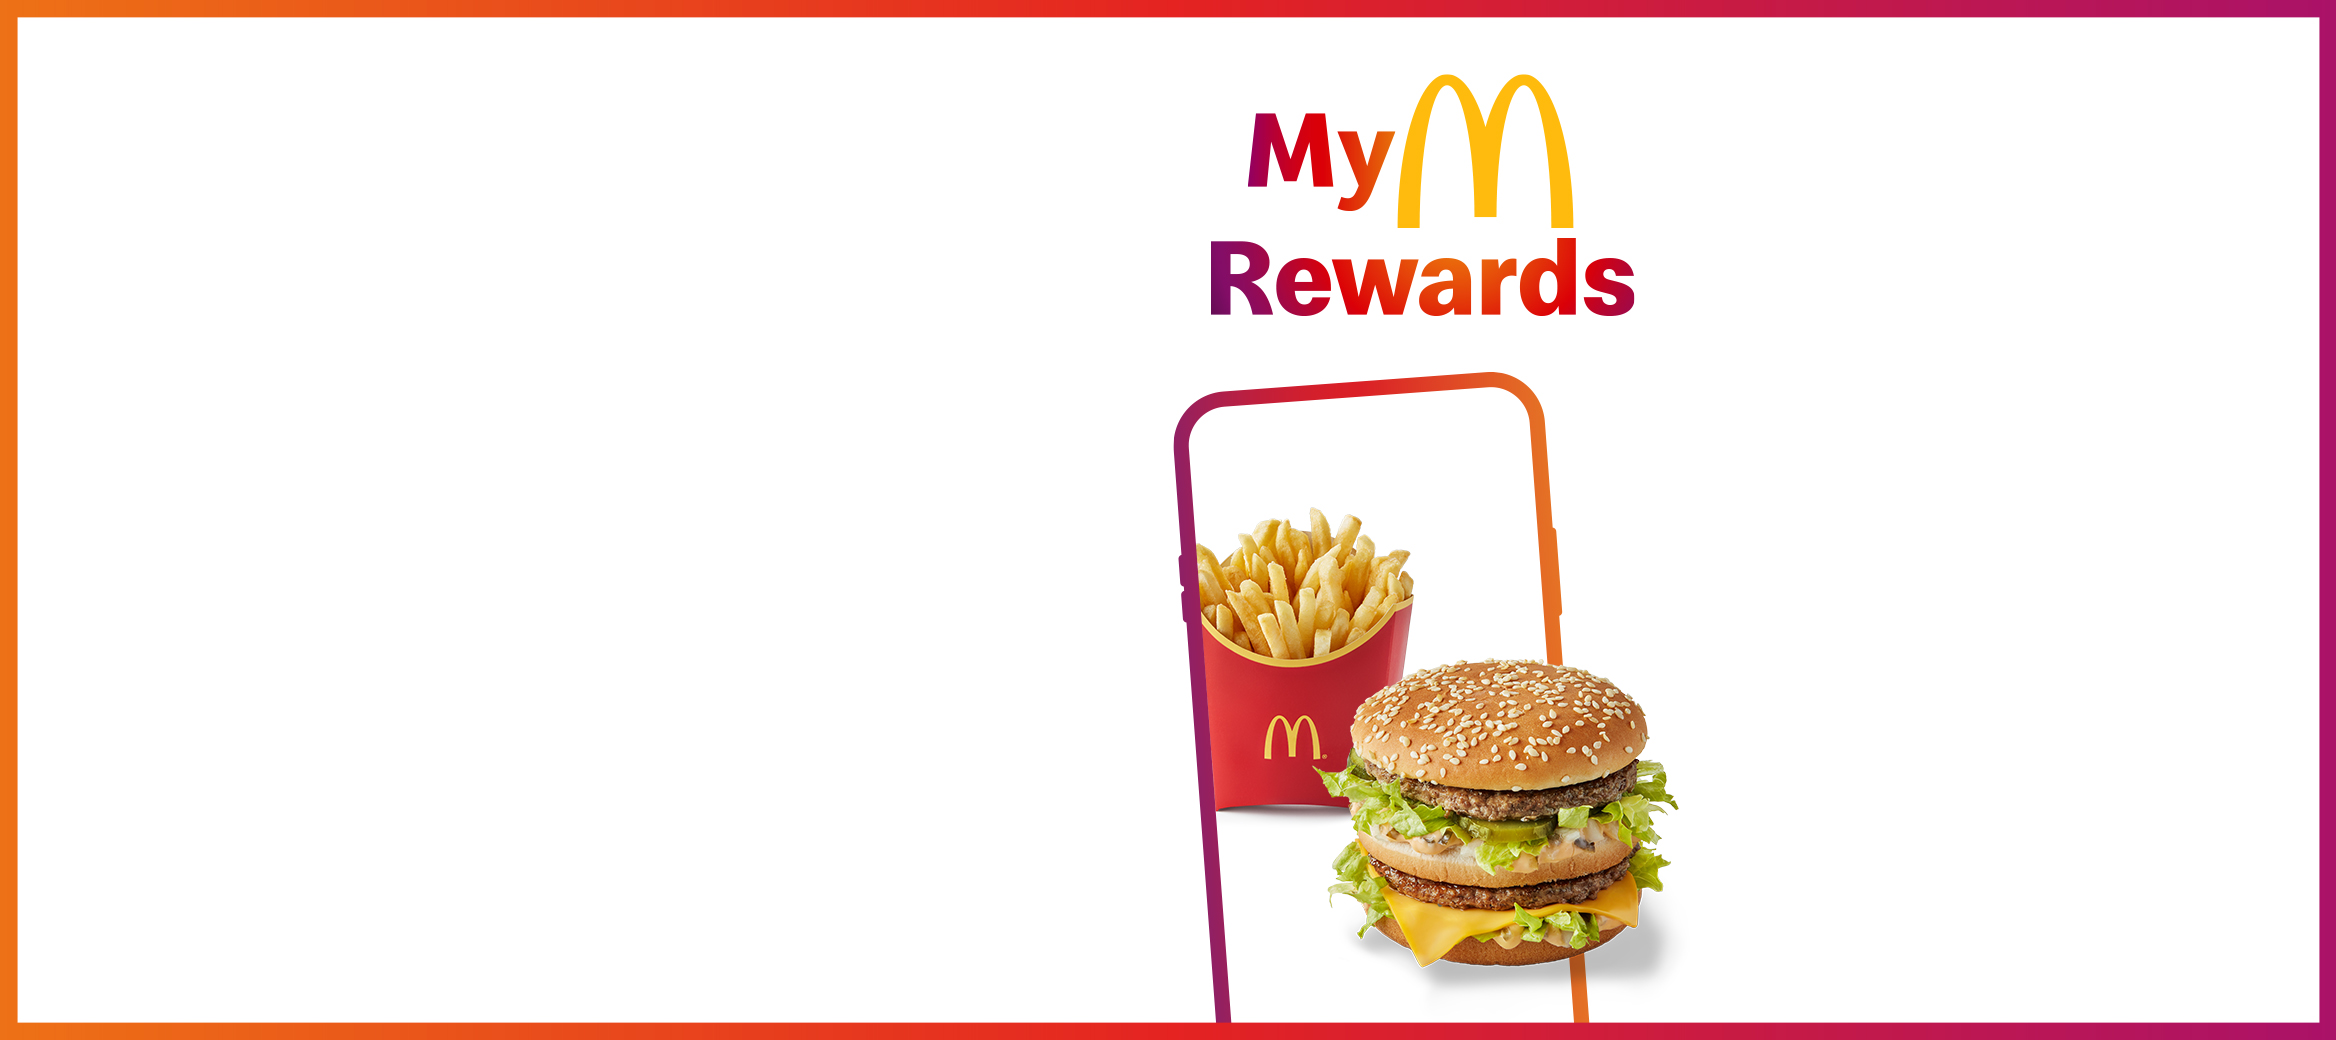 McDonalds - Free medium fries and 1000 bonus points